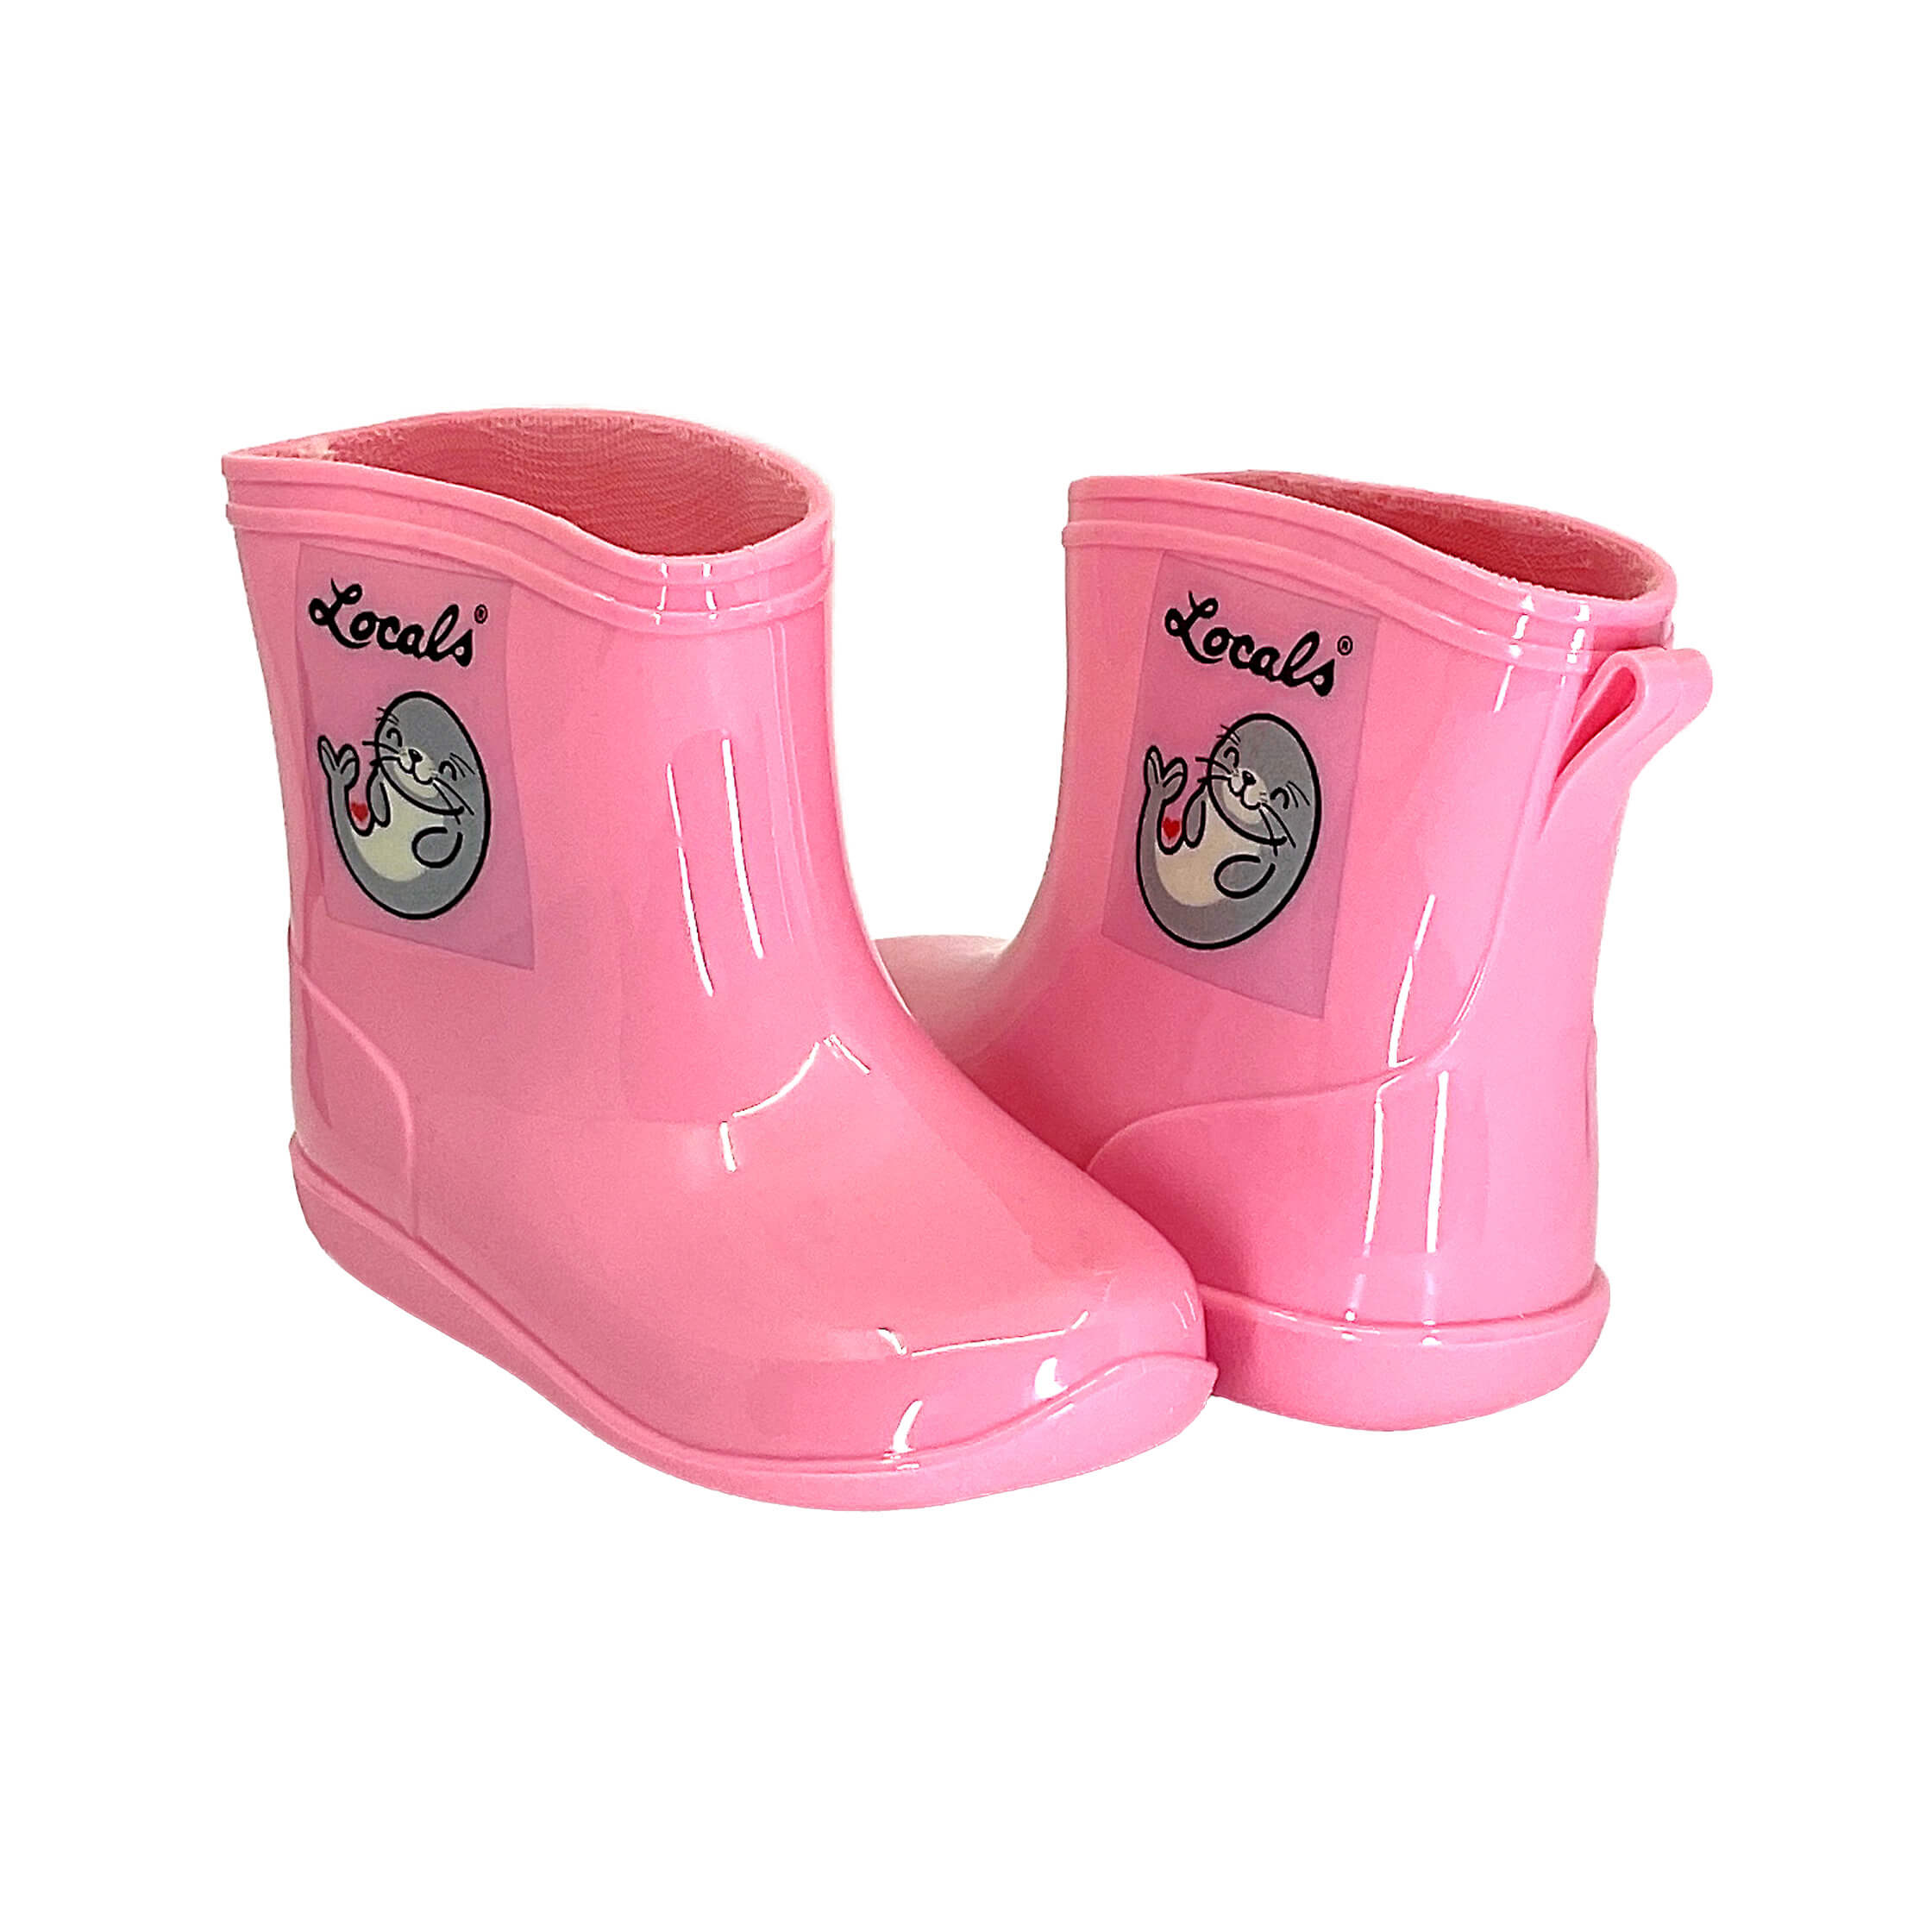 New! Kids Rain Boots - Pink